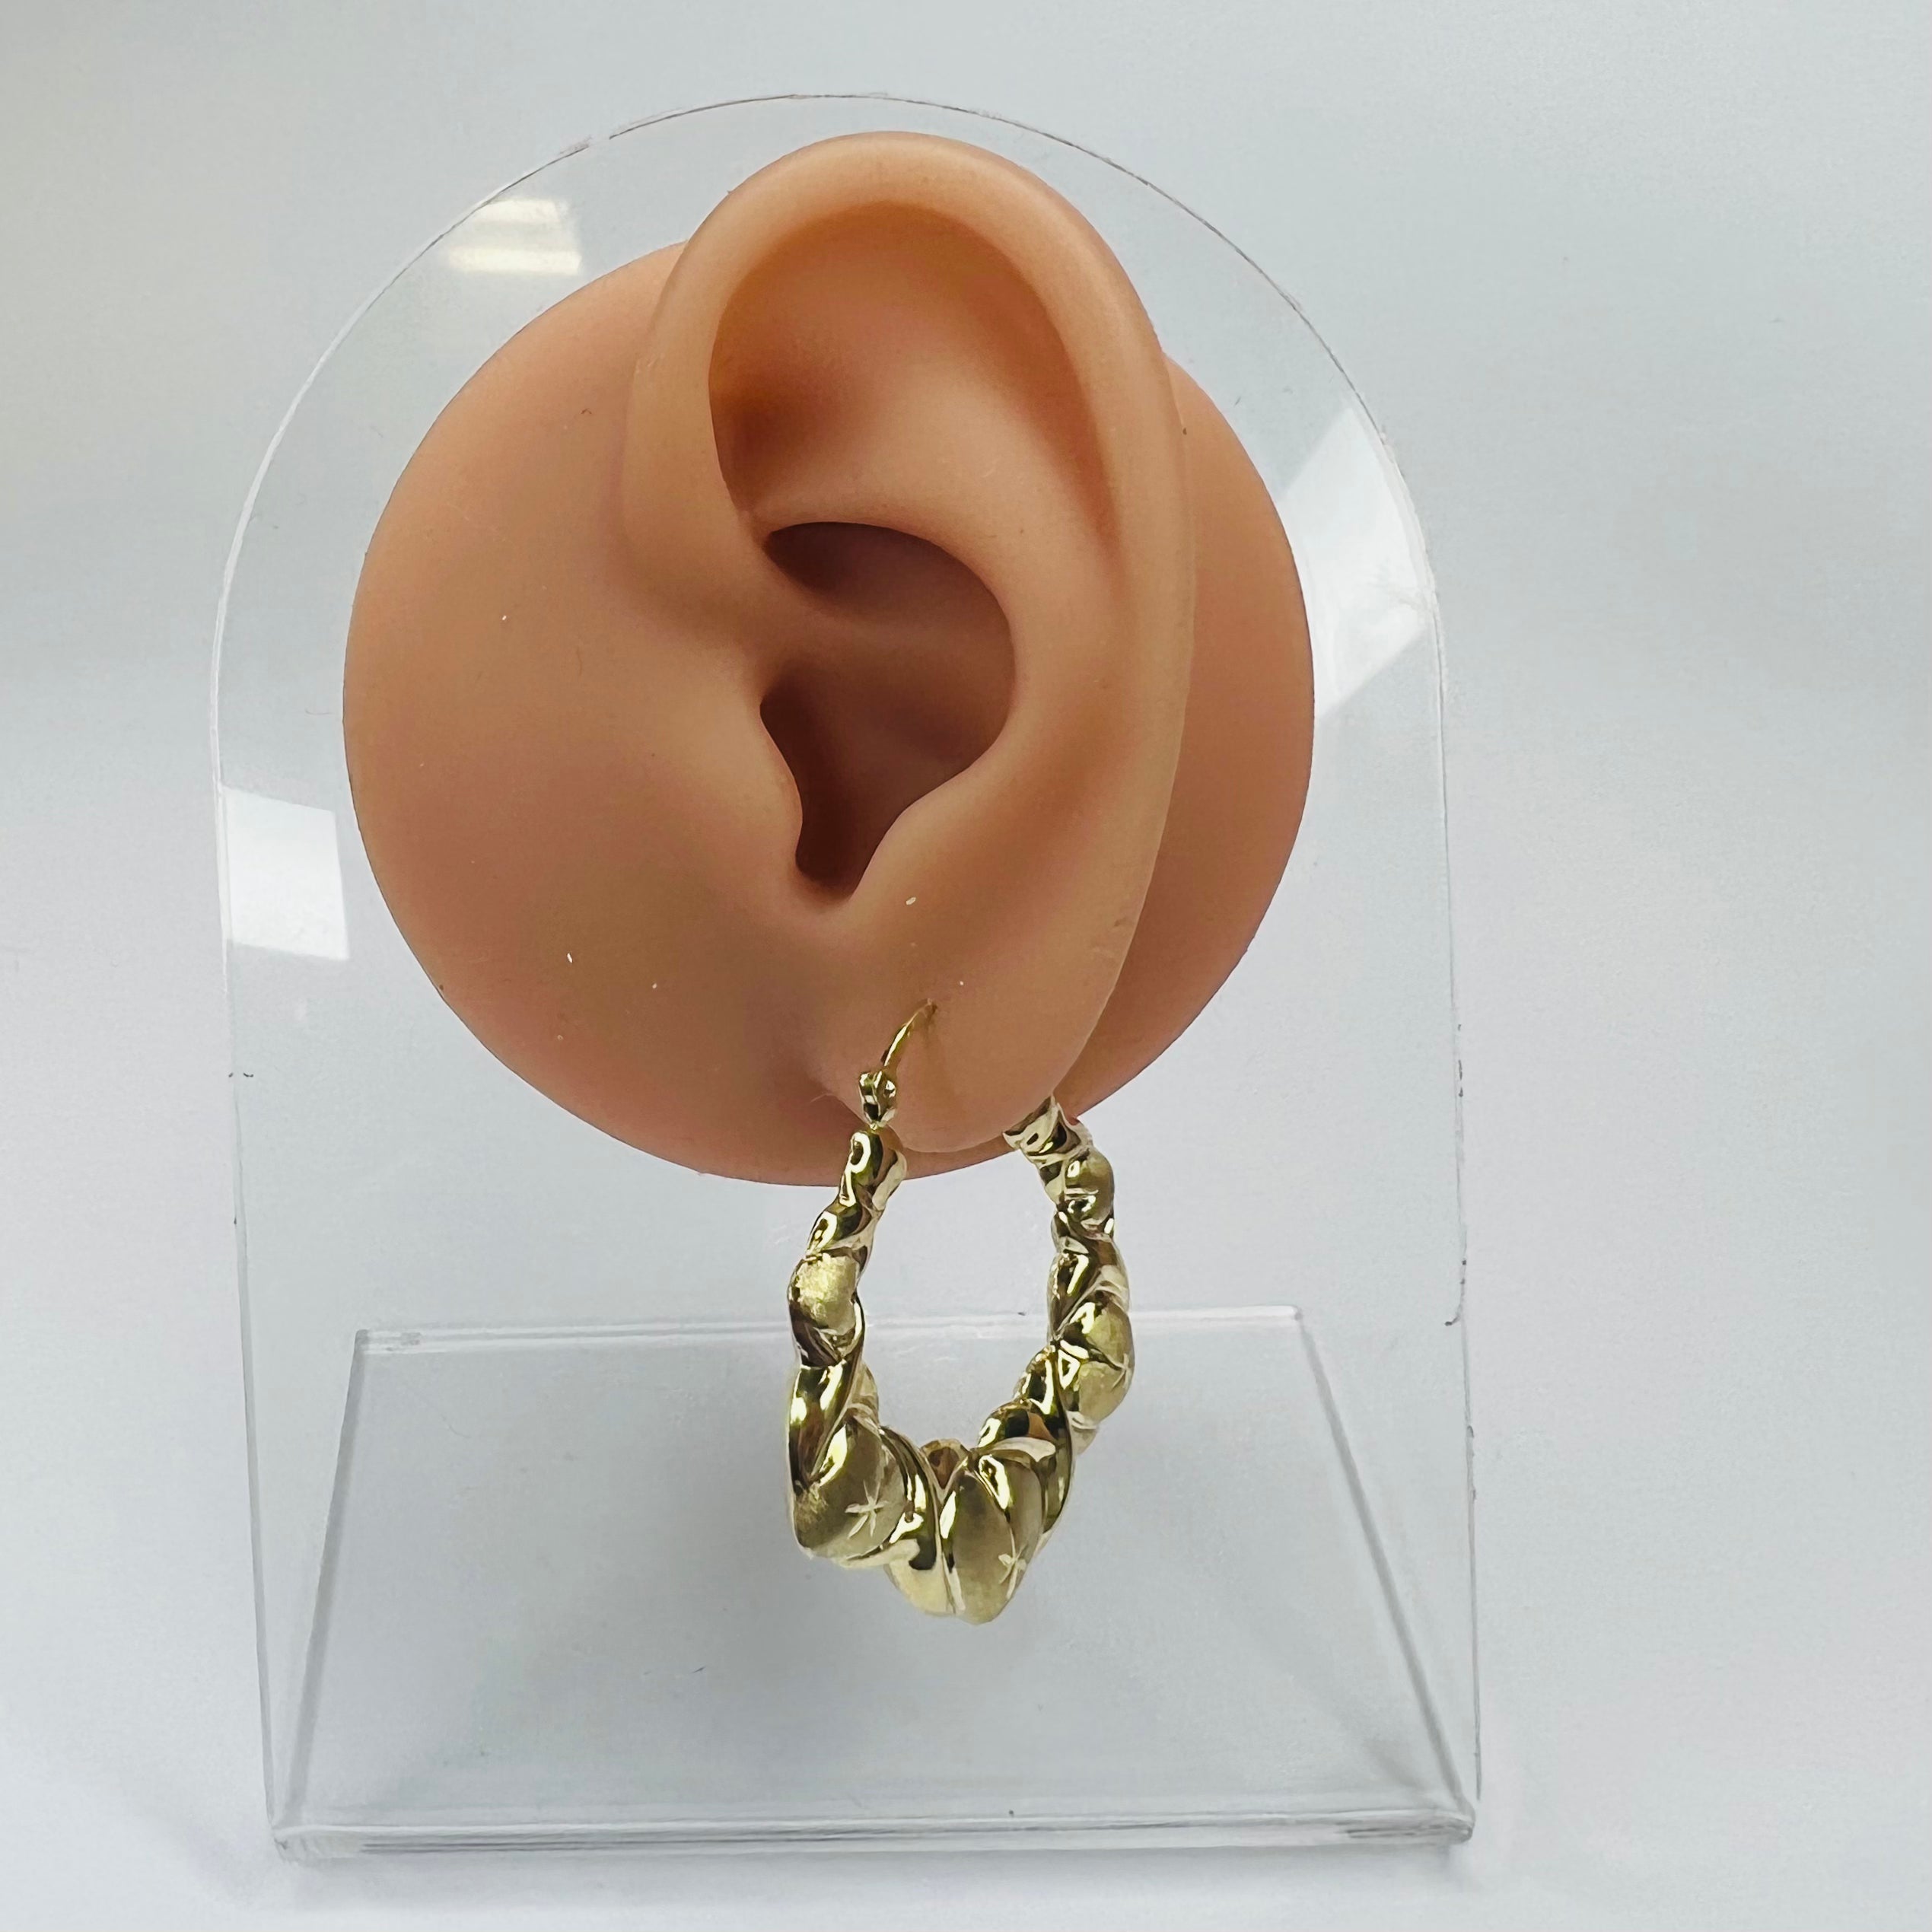 New 10K Solid Yellow Gold Heart Patterned Hoop Earrings 1.75"x1.5"